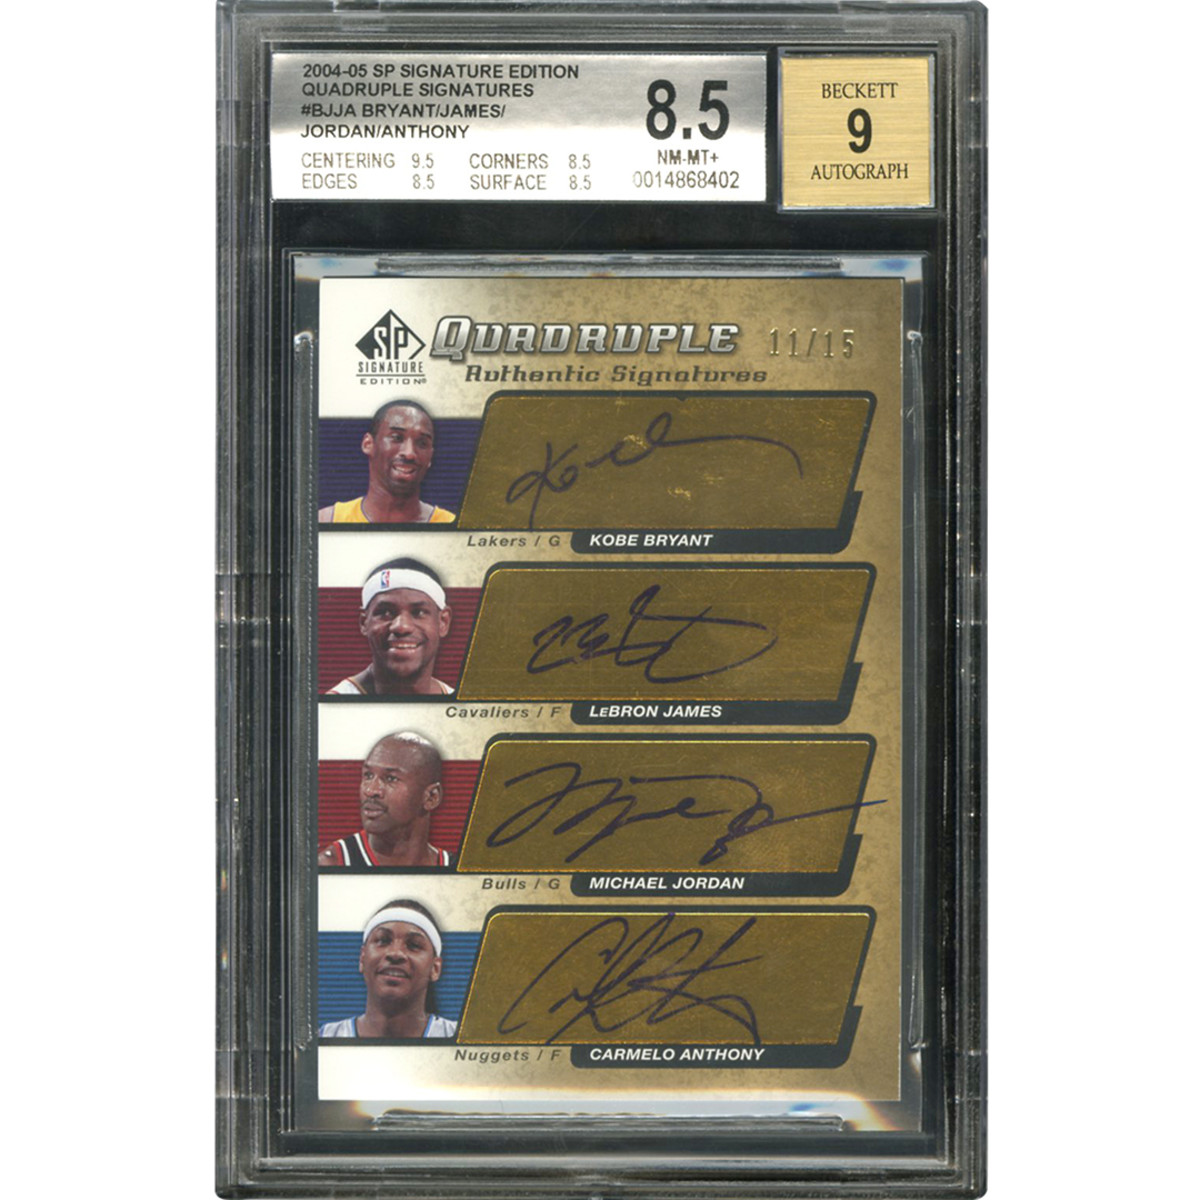 2004-05 SP Signature Quadruple Signatures card featuring Kobe Bryant, LeBron James, Michael Jordan and Carmelo Anthony.